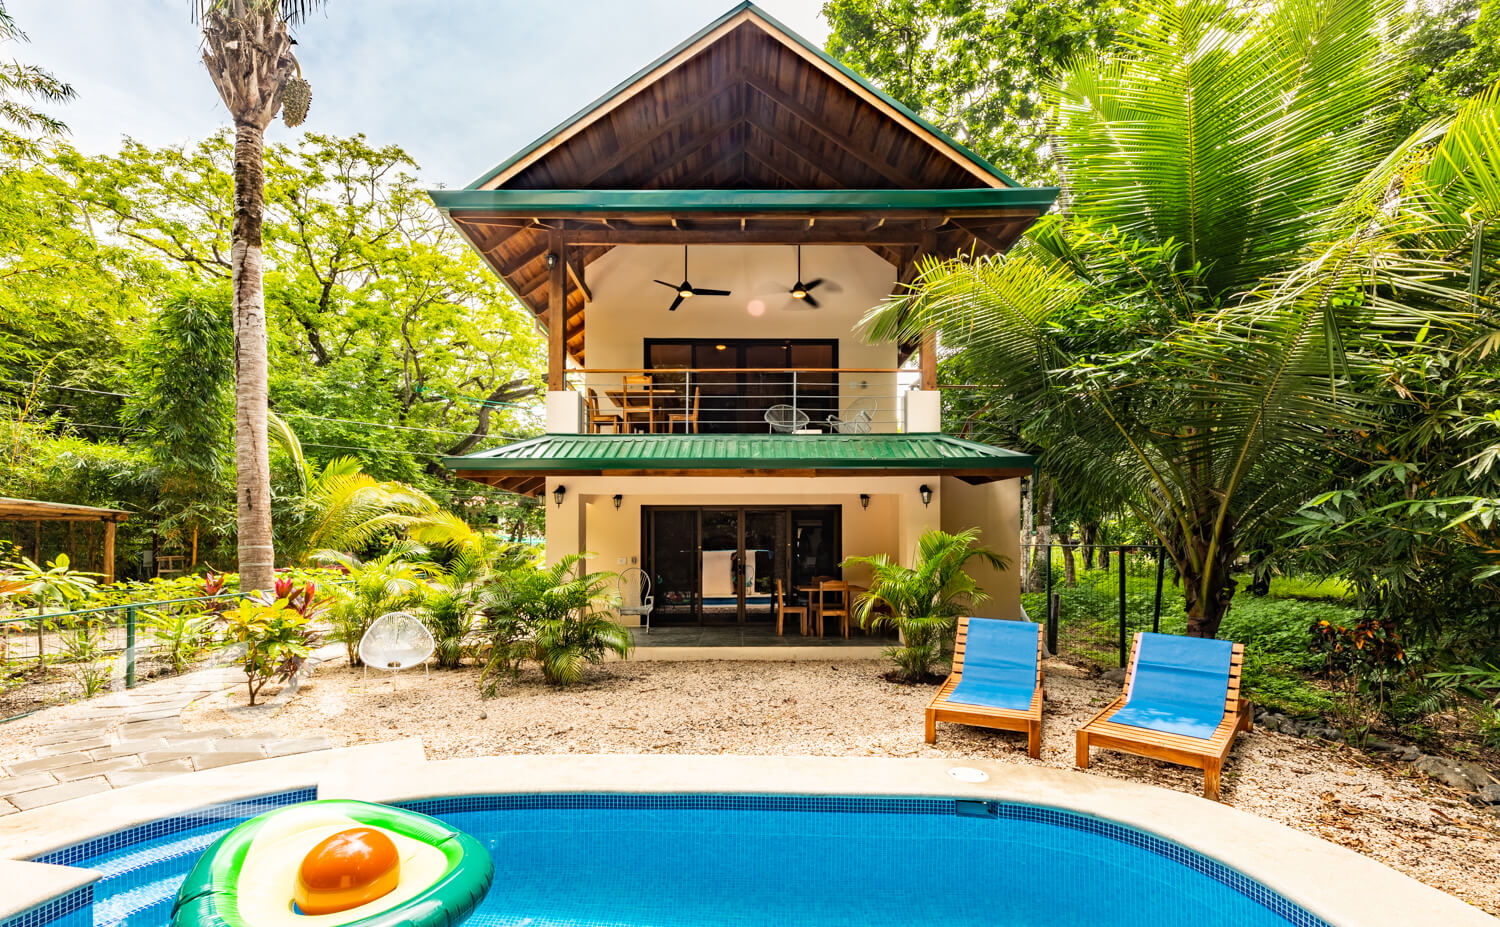 Casa-Nambi-Wanderlust-Realty-Real-Estate-Rentals-Nosara-Costa-Rica-2.jpg